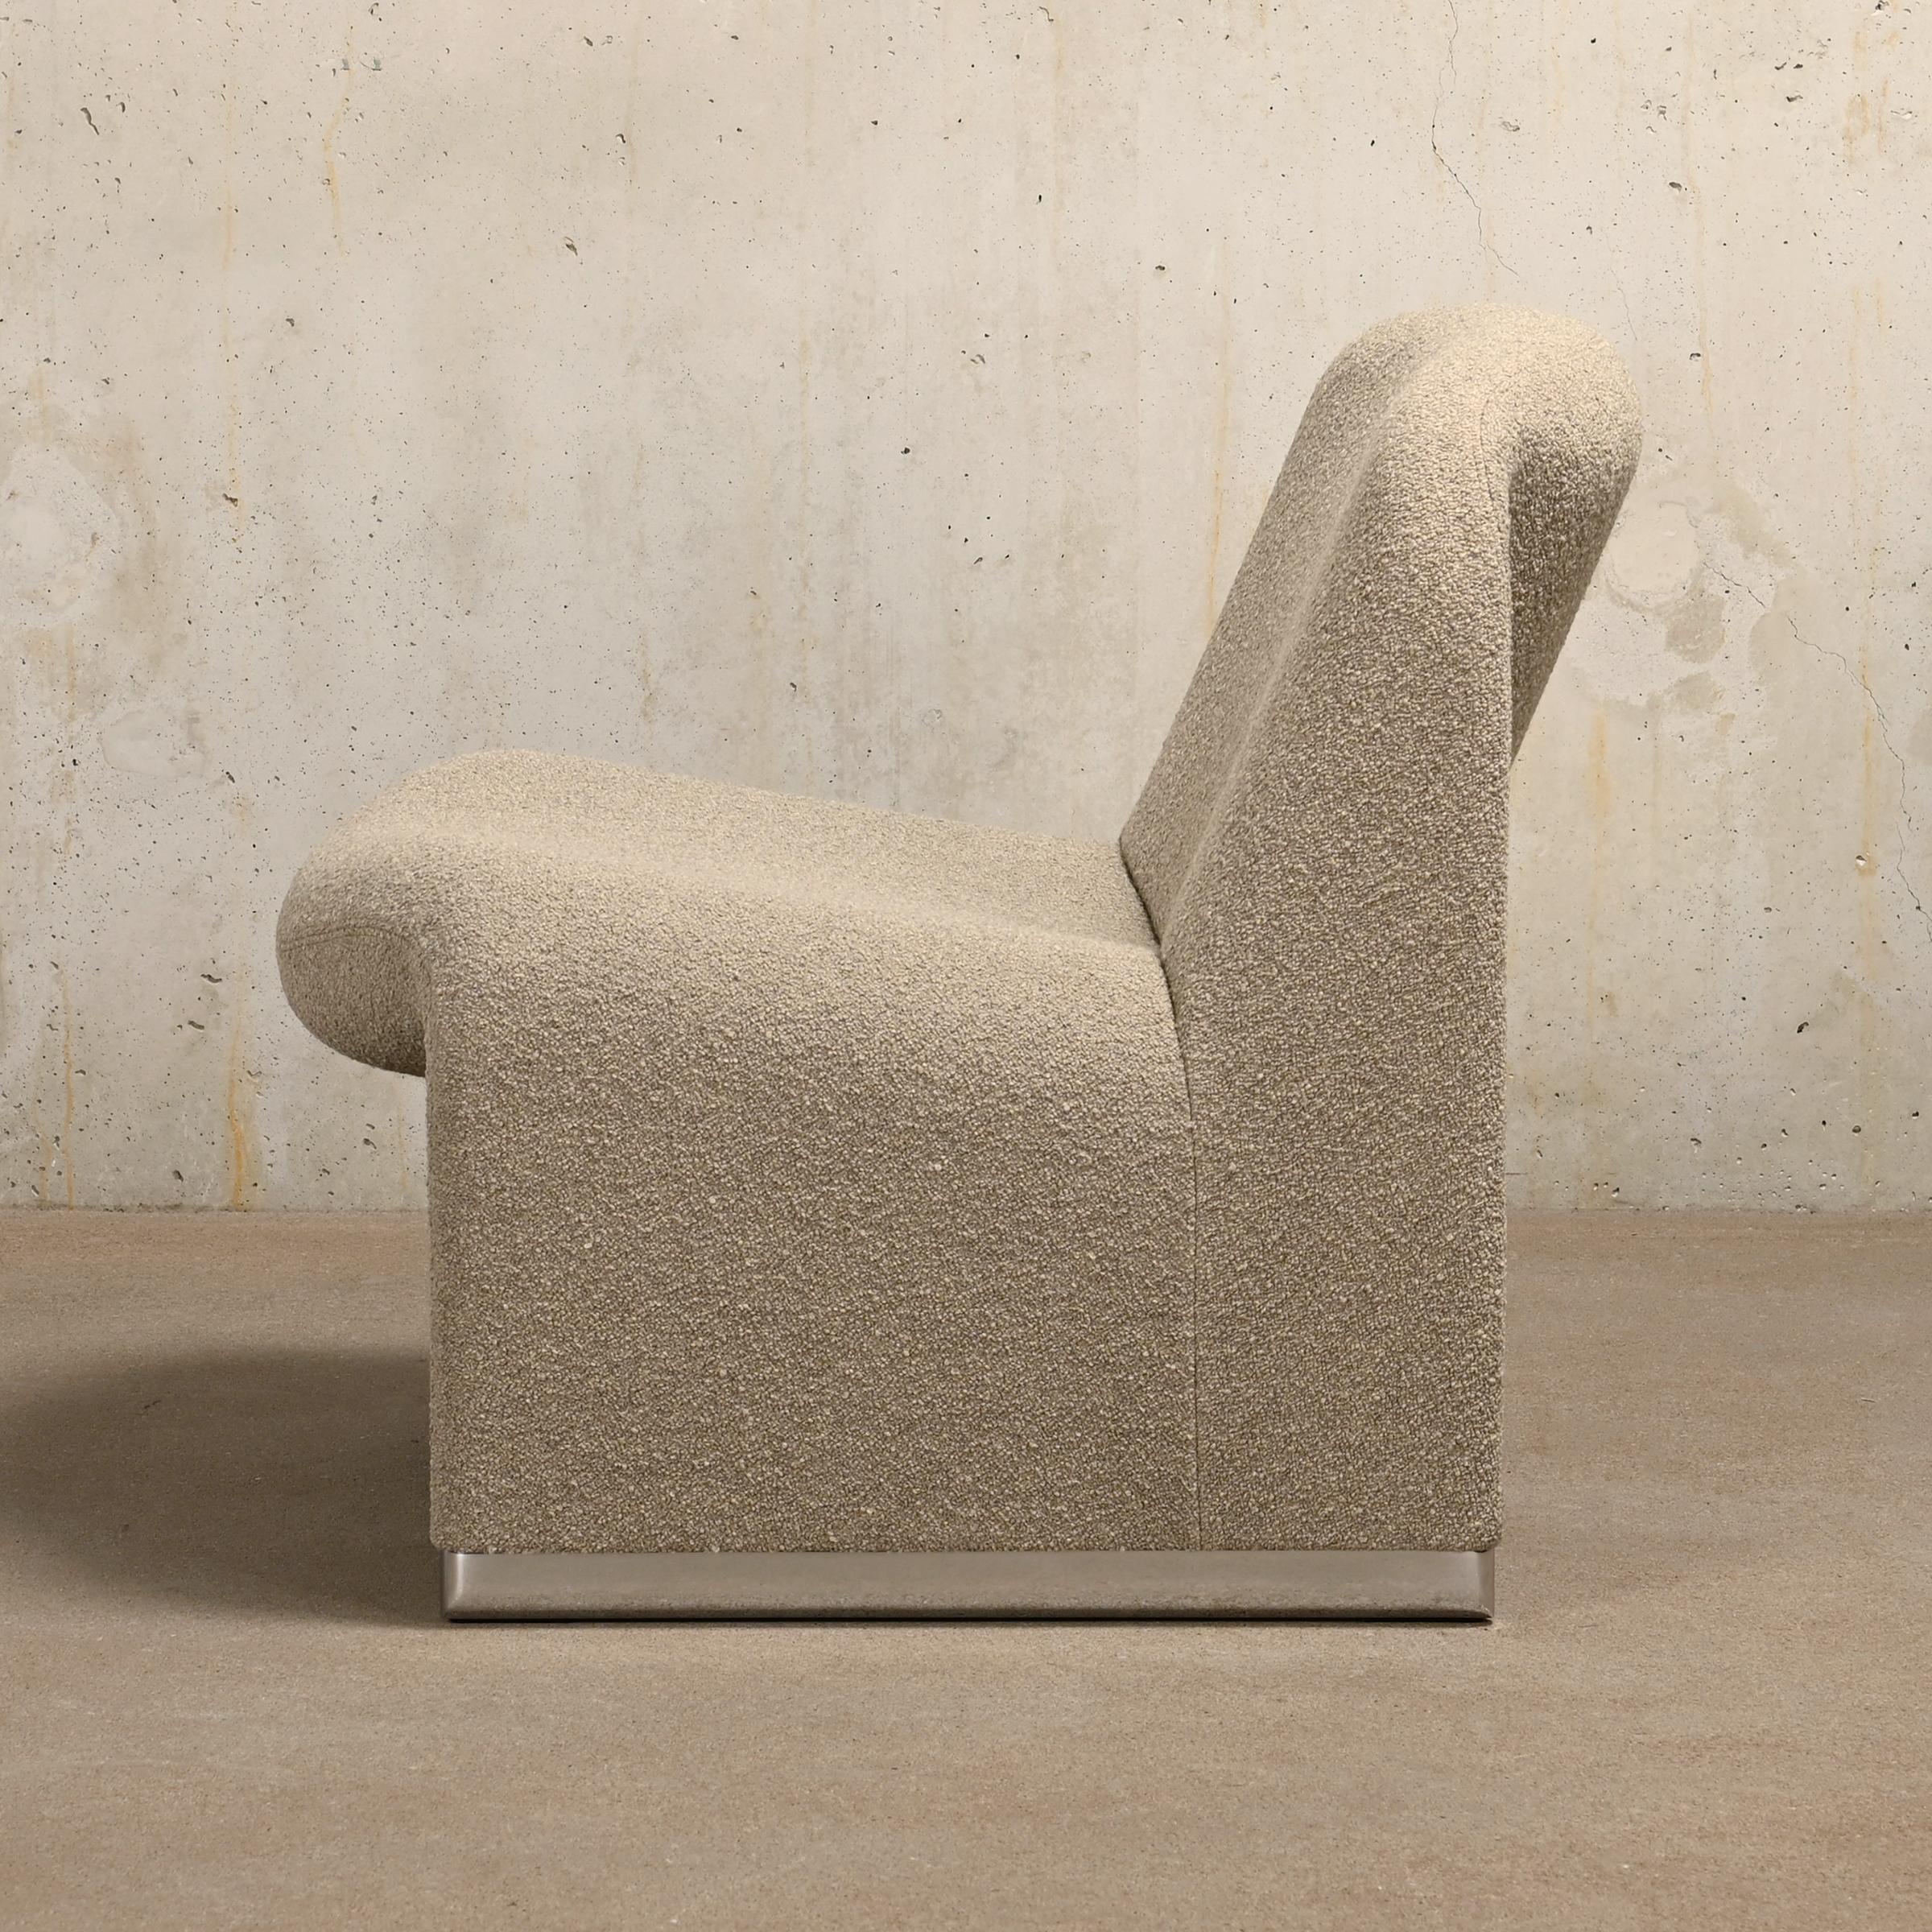 Giancarlo Piretti Alky Lounge Chair in Stone Grey Bouclé Wool, Anonima Castelli For Sale 1